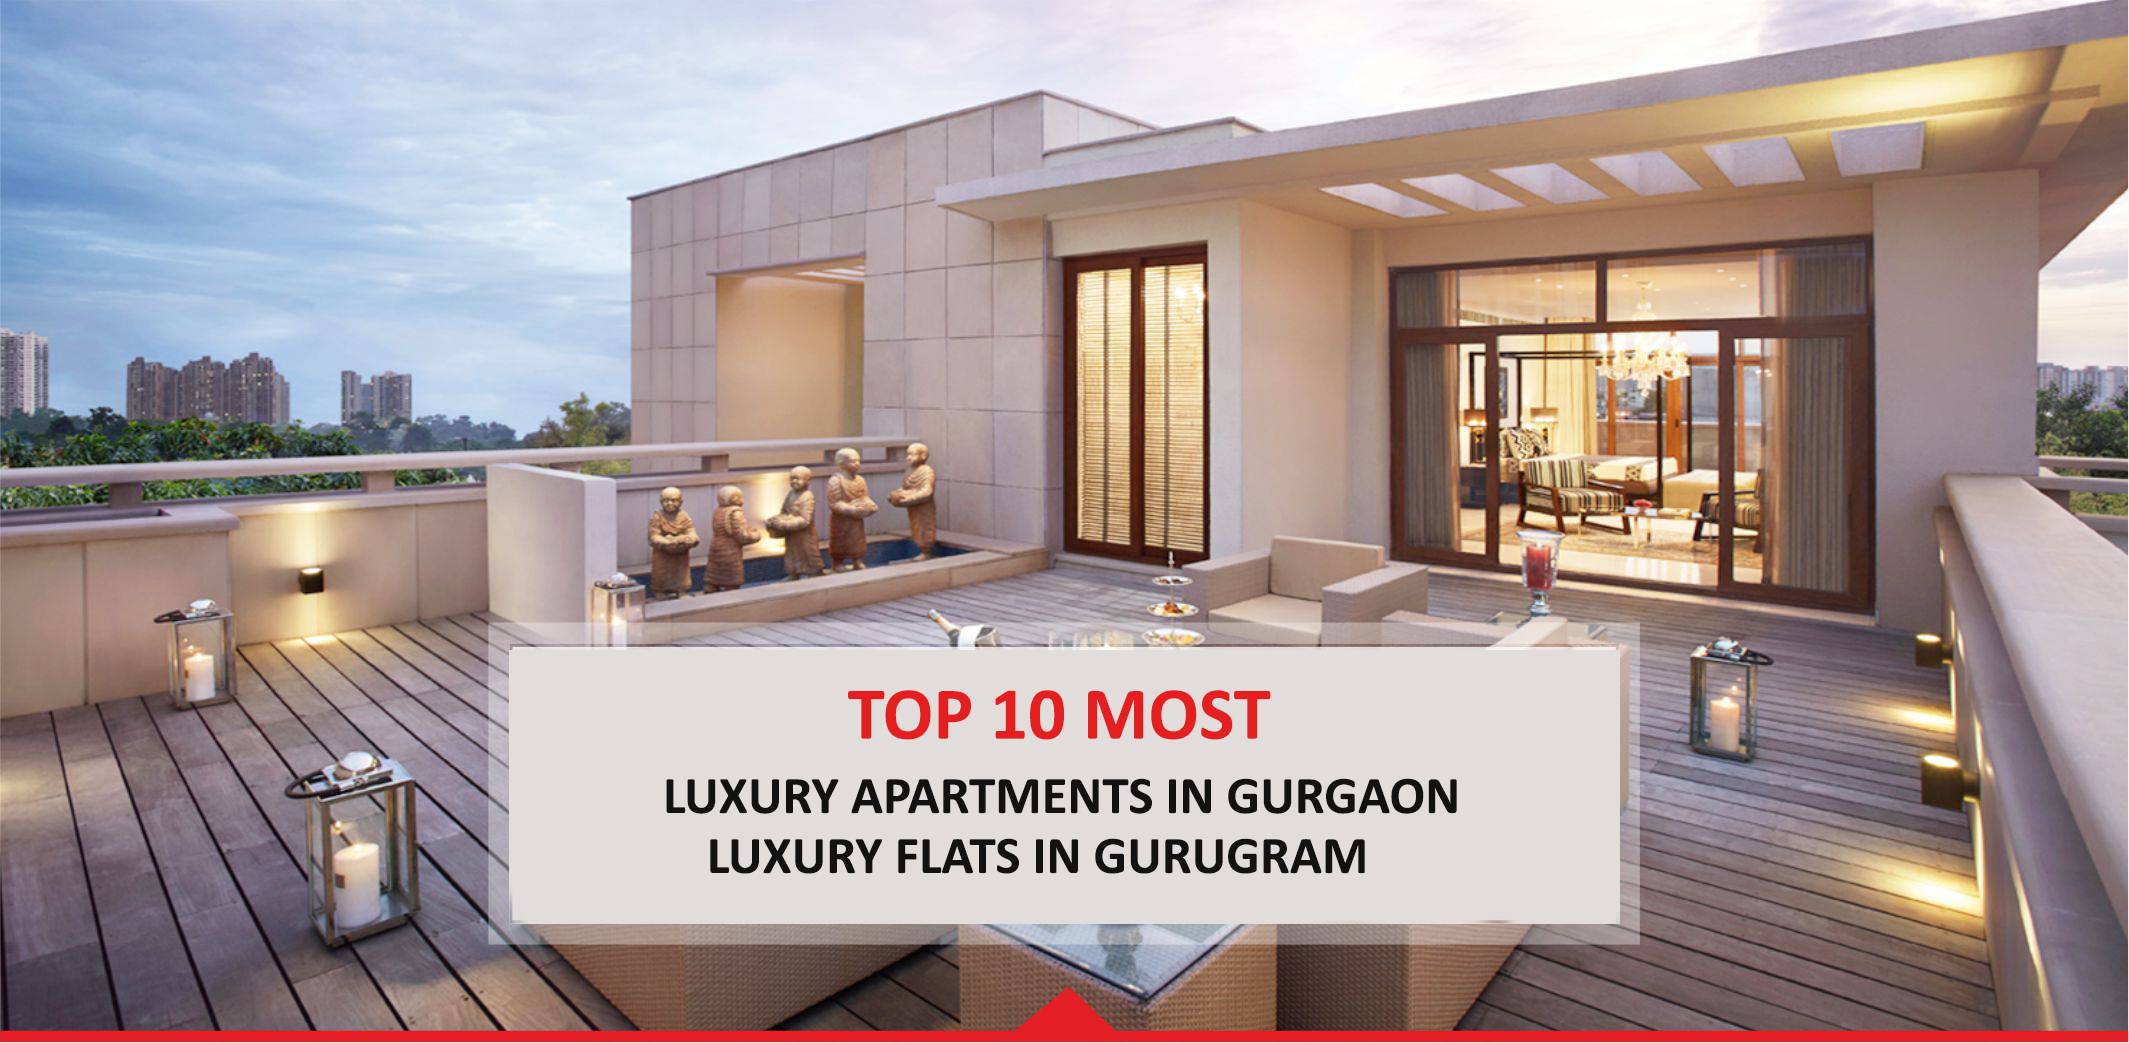 Top 10 Most Luxury Apartments in Gurgaon - Luxury Flats in Gurugram